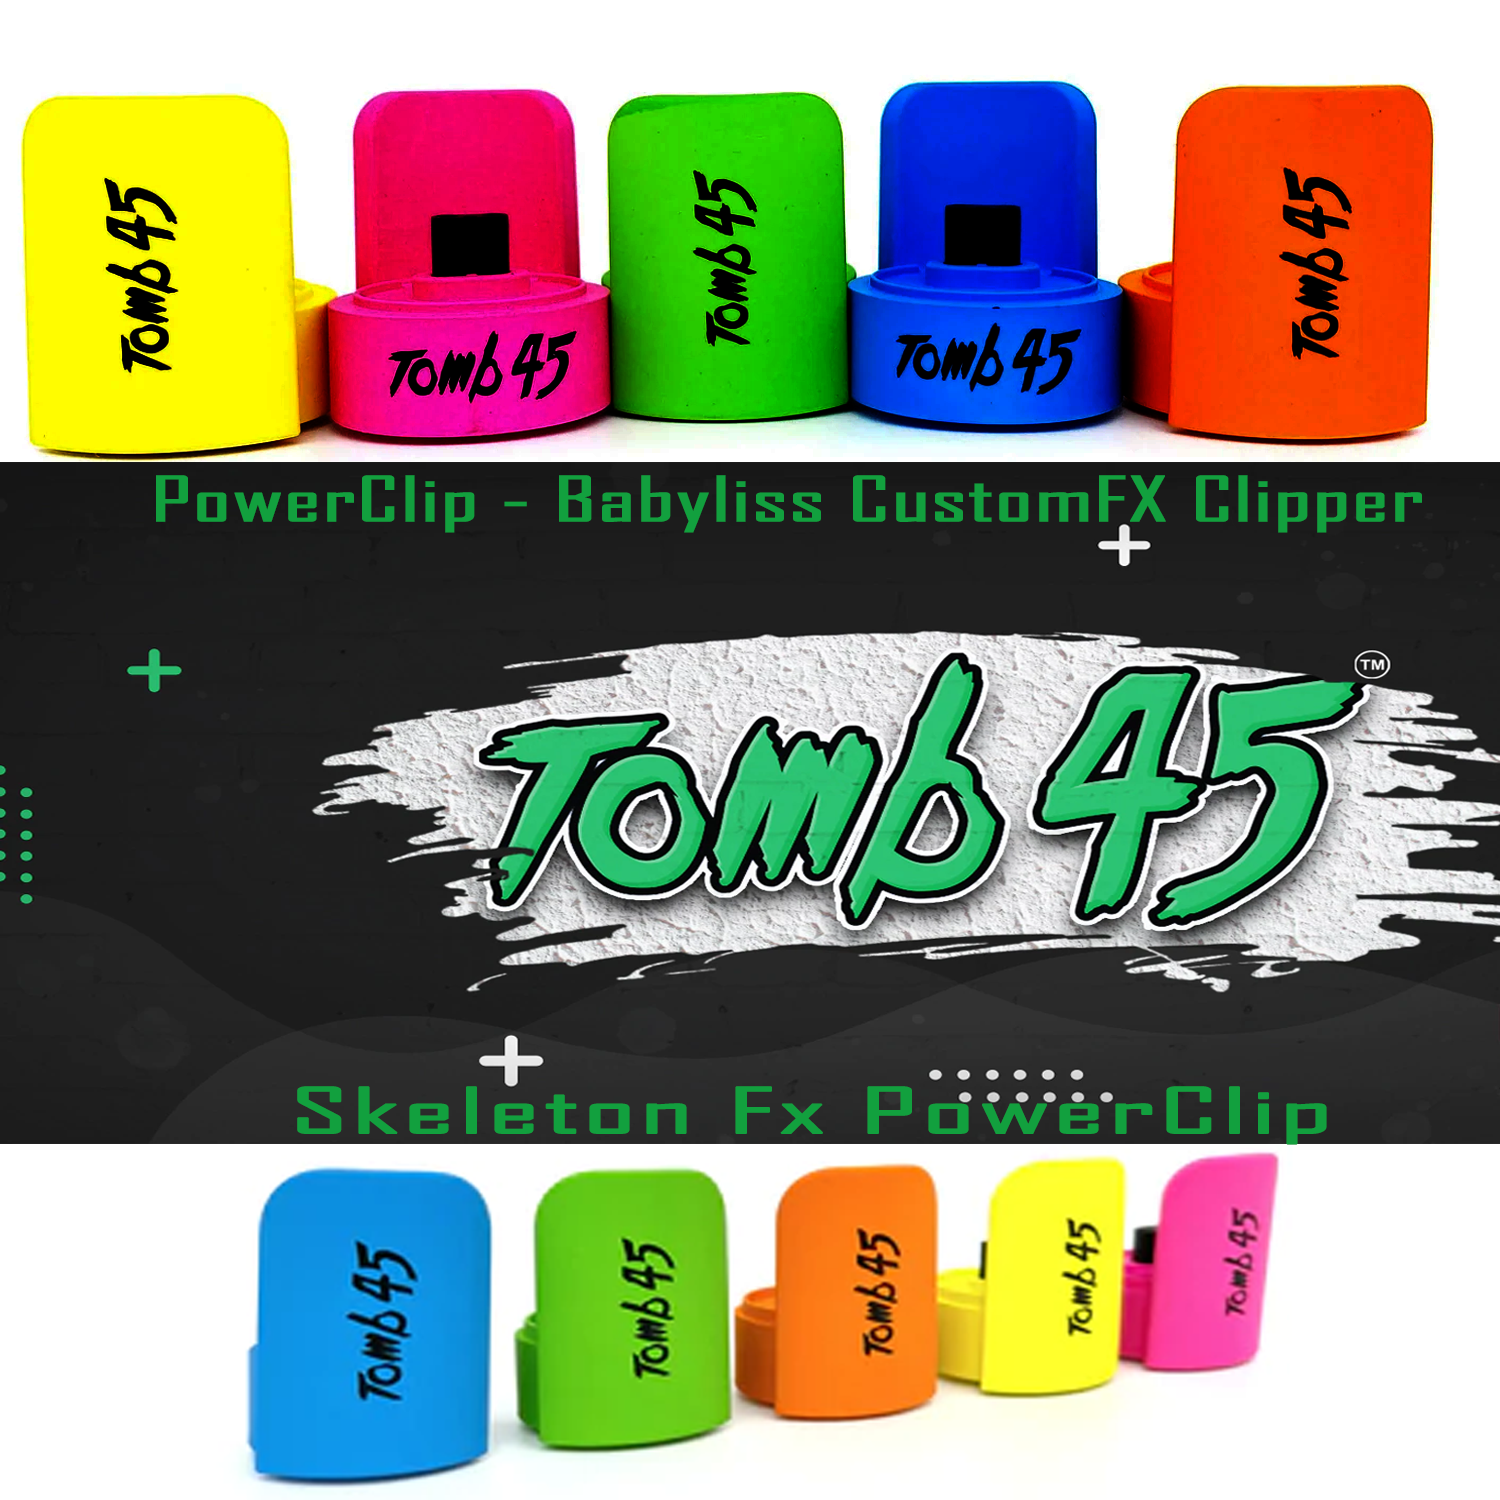 Tomb45 Babyliss Skeleton Trimmer Power Clip